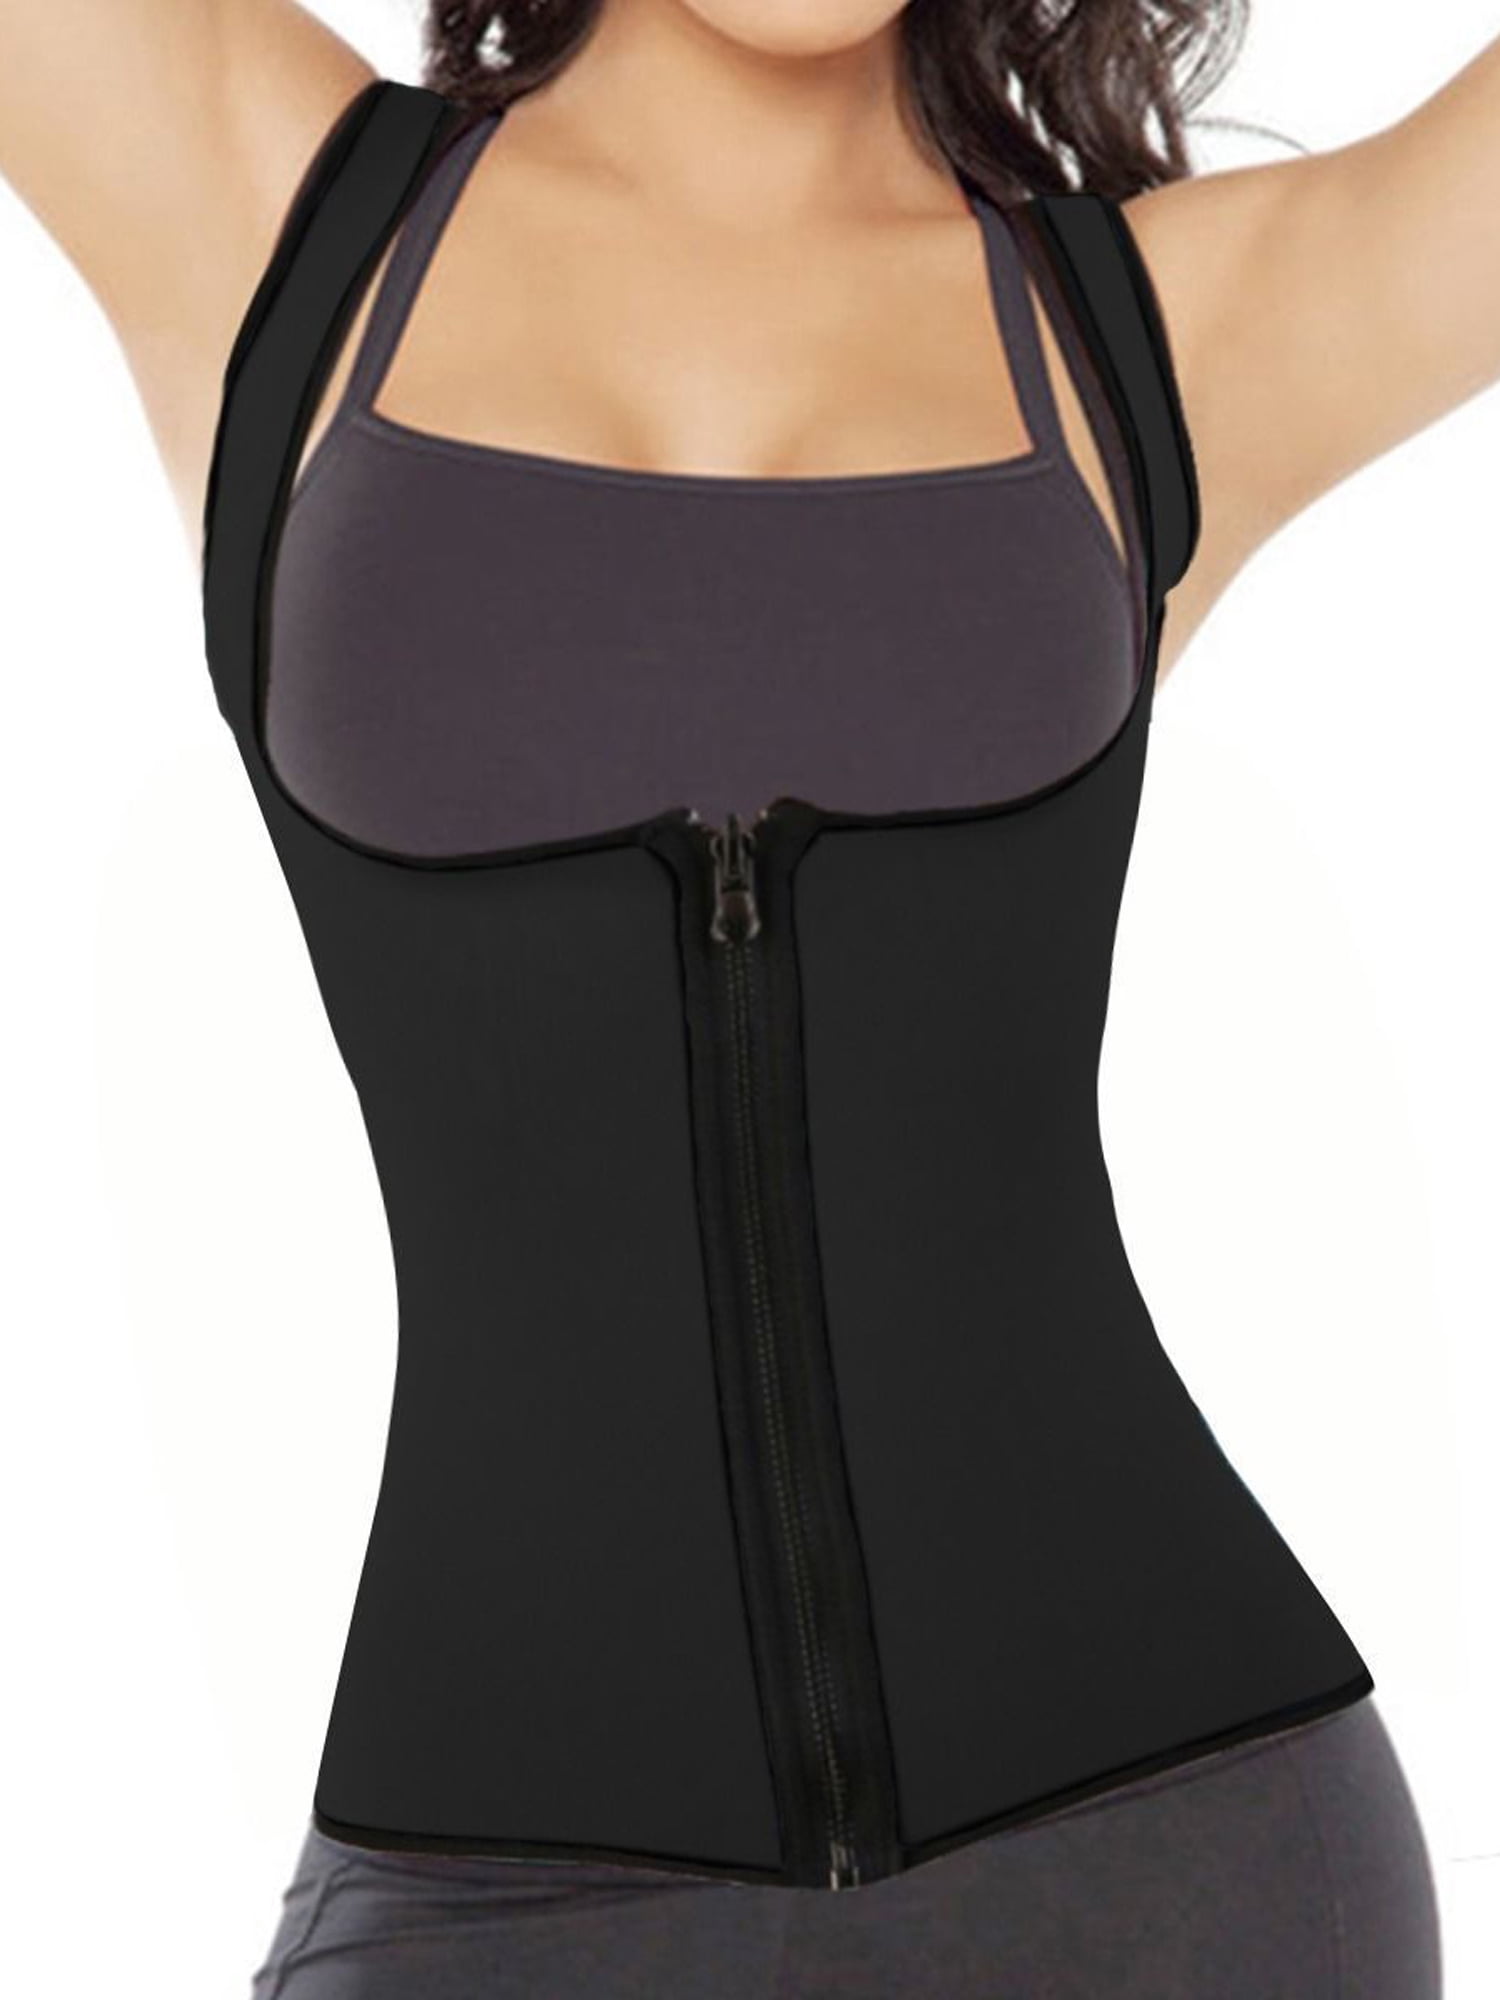 Sayfut Womens Slimming Body Shaper Neoprene Corset Vest Hot Sweat Shirt For Weight Loss Ultra